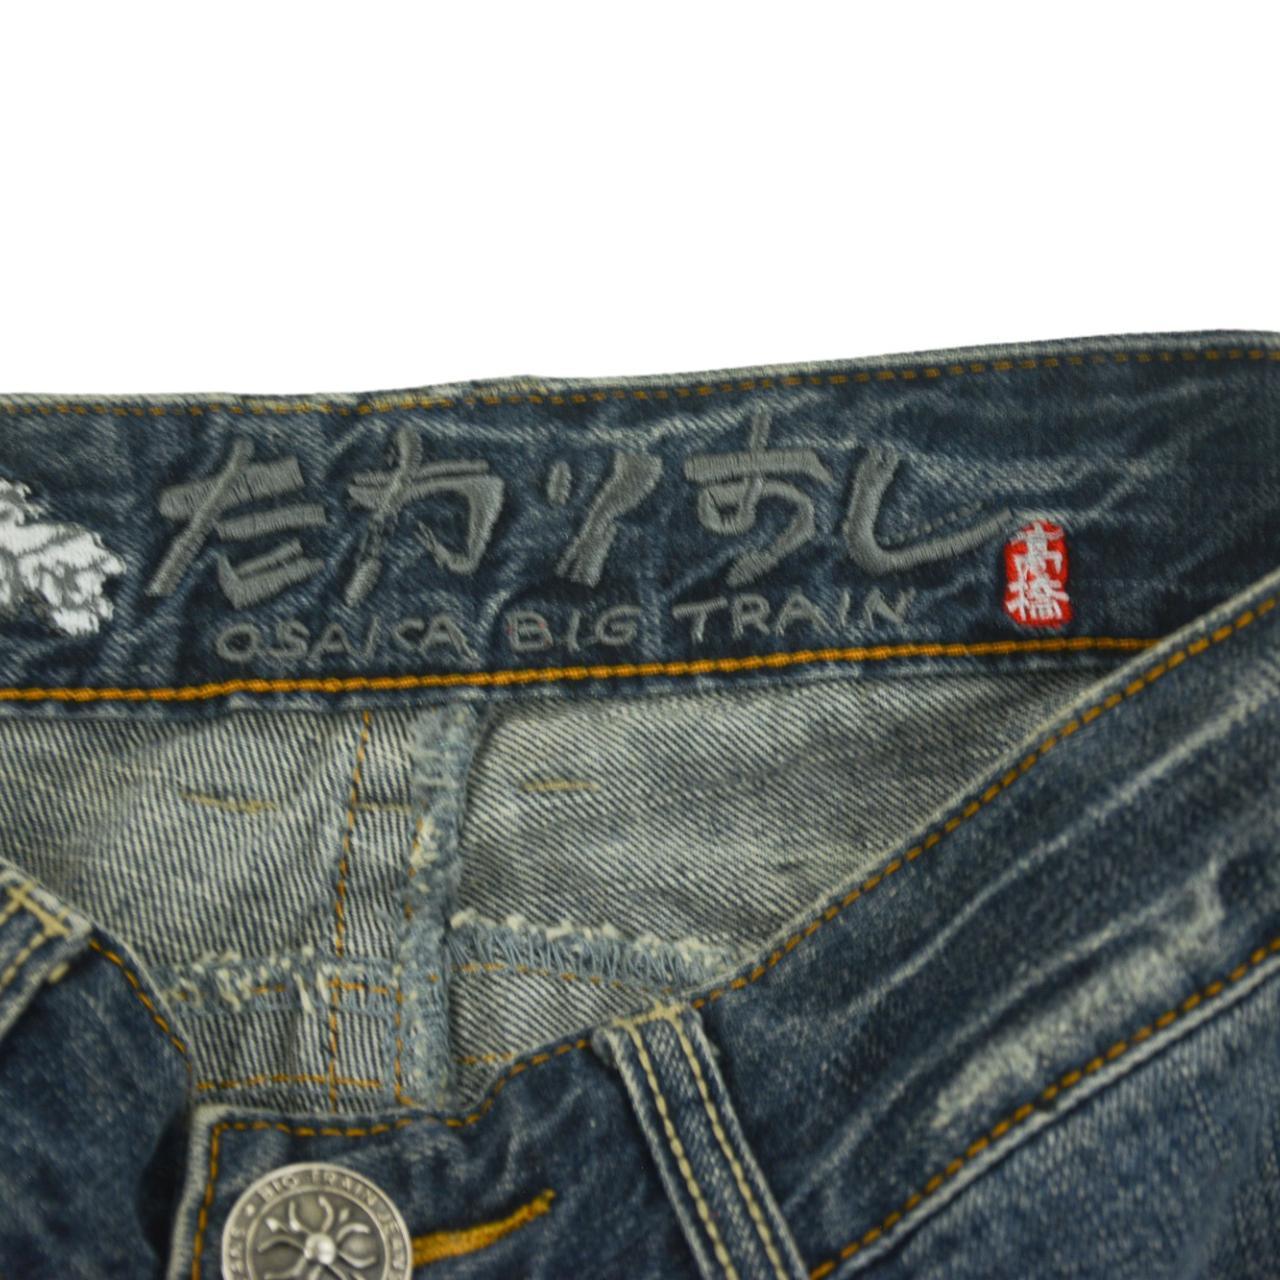 Vintage Skull Big Train Japanese Denim Jeans Size W31 - Known Source